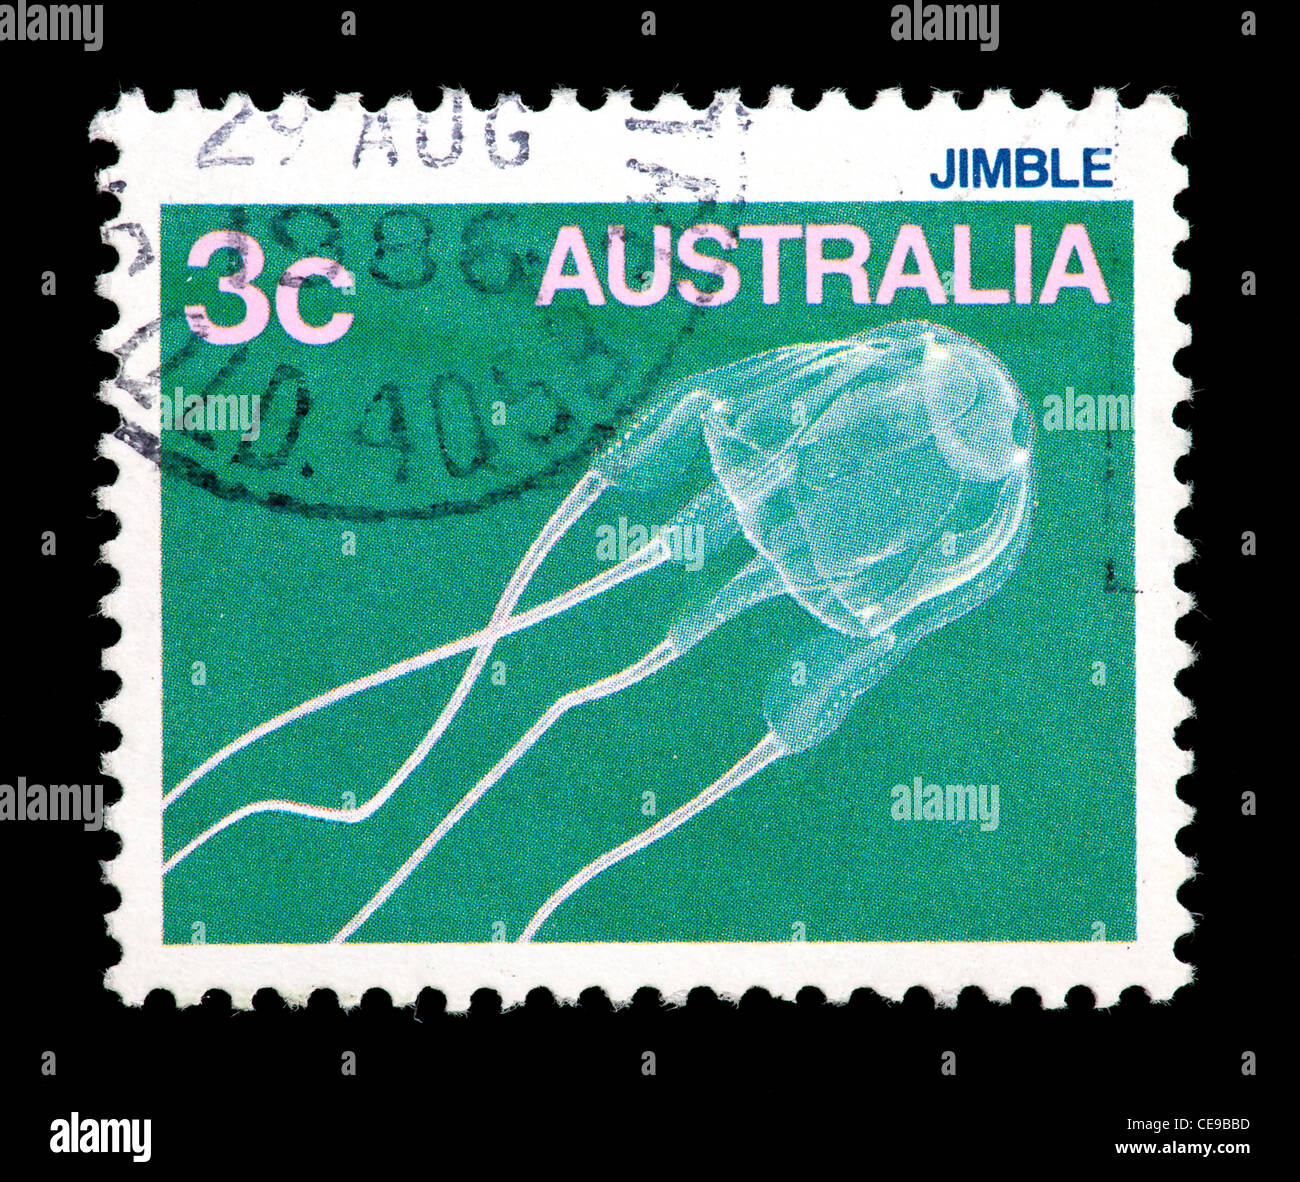 Postage stamp from Australia depicting a Jimble jellyfish (Carybdea rastoni) Stock Photo